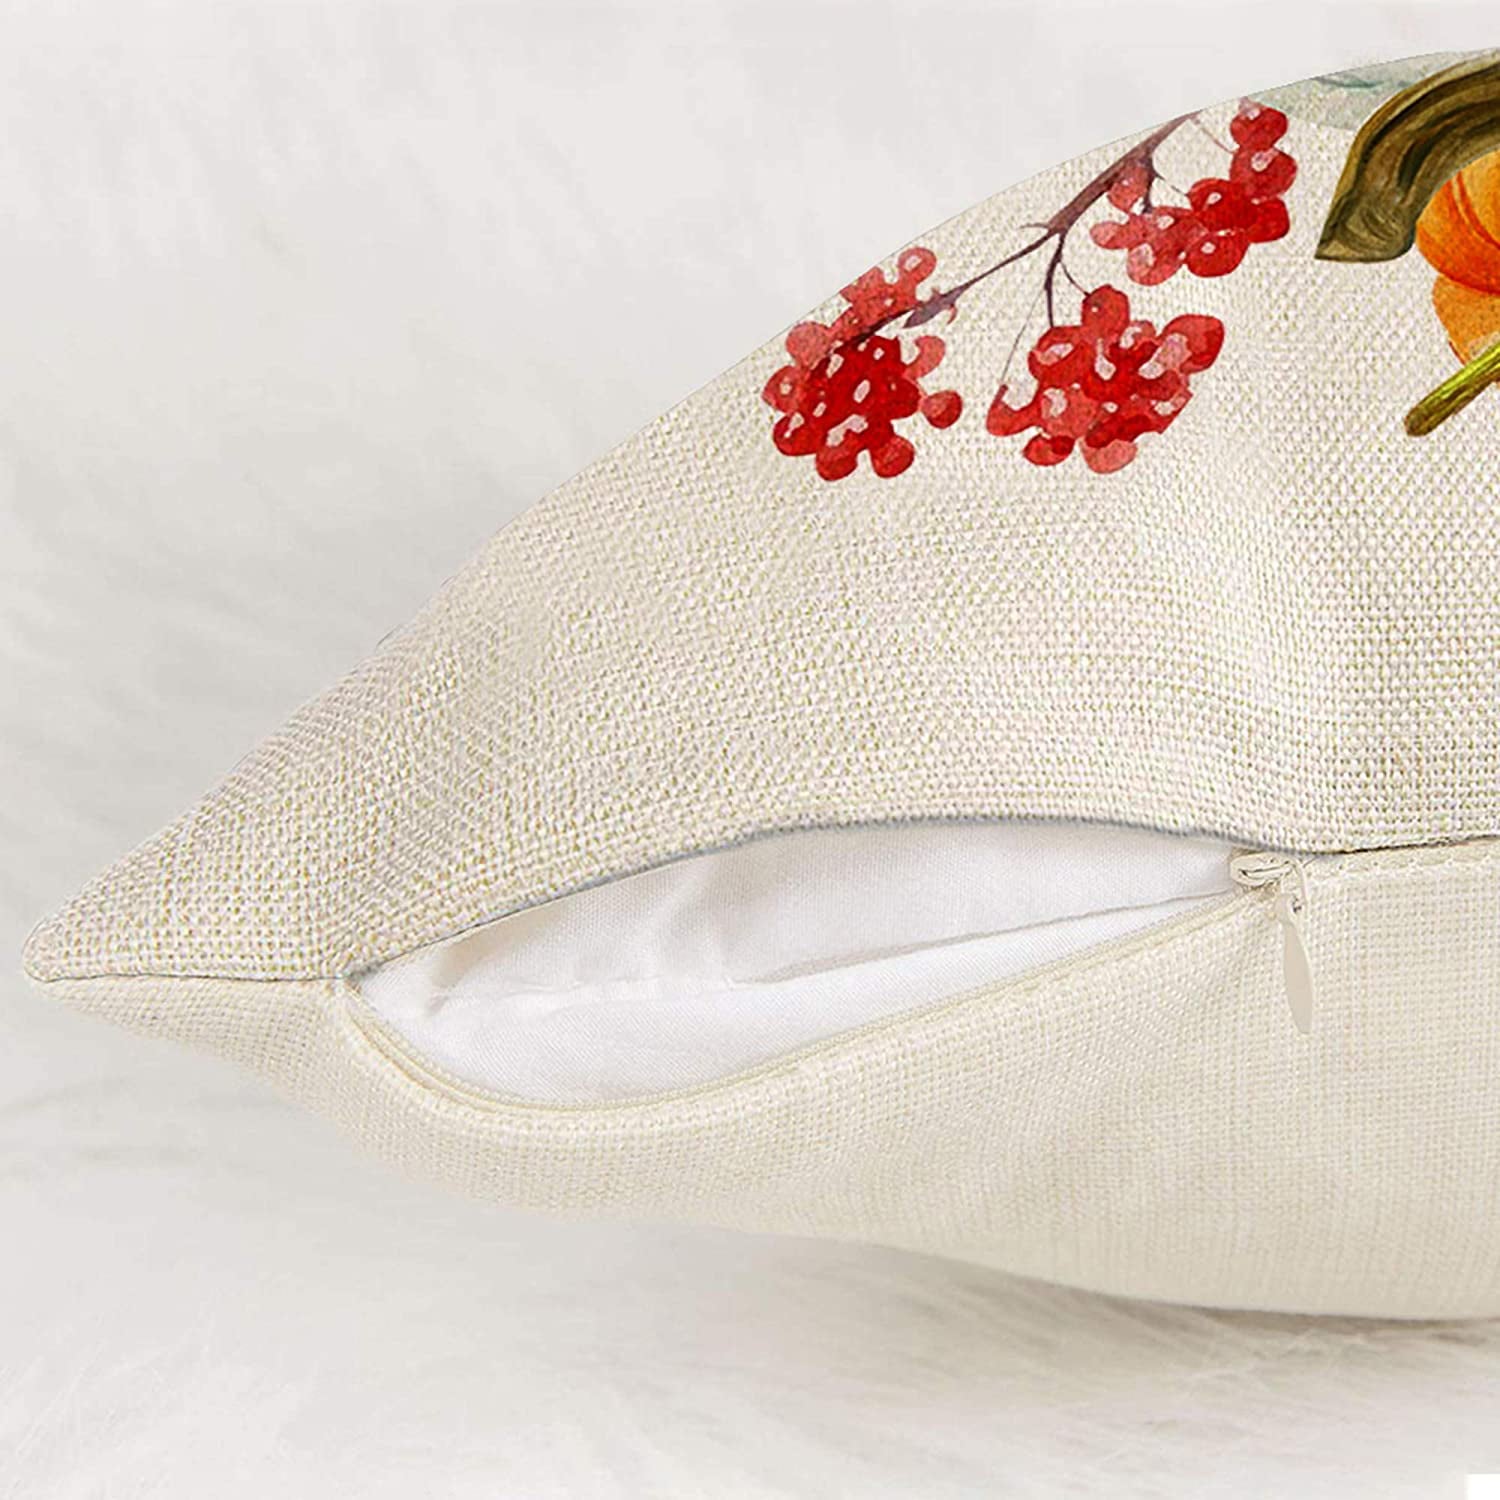 Harvest-Inspired Pillow Covers: DecorX 4-Piece Set in Autumn Hues, Pumpkin & Sunflower Patterns